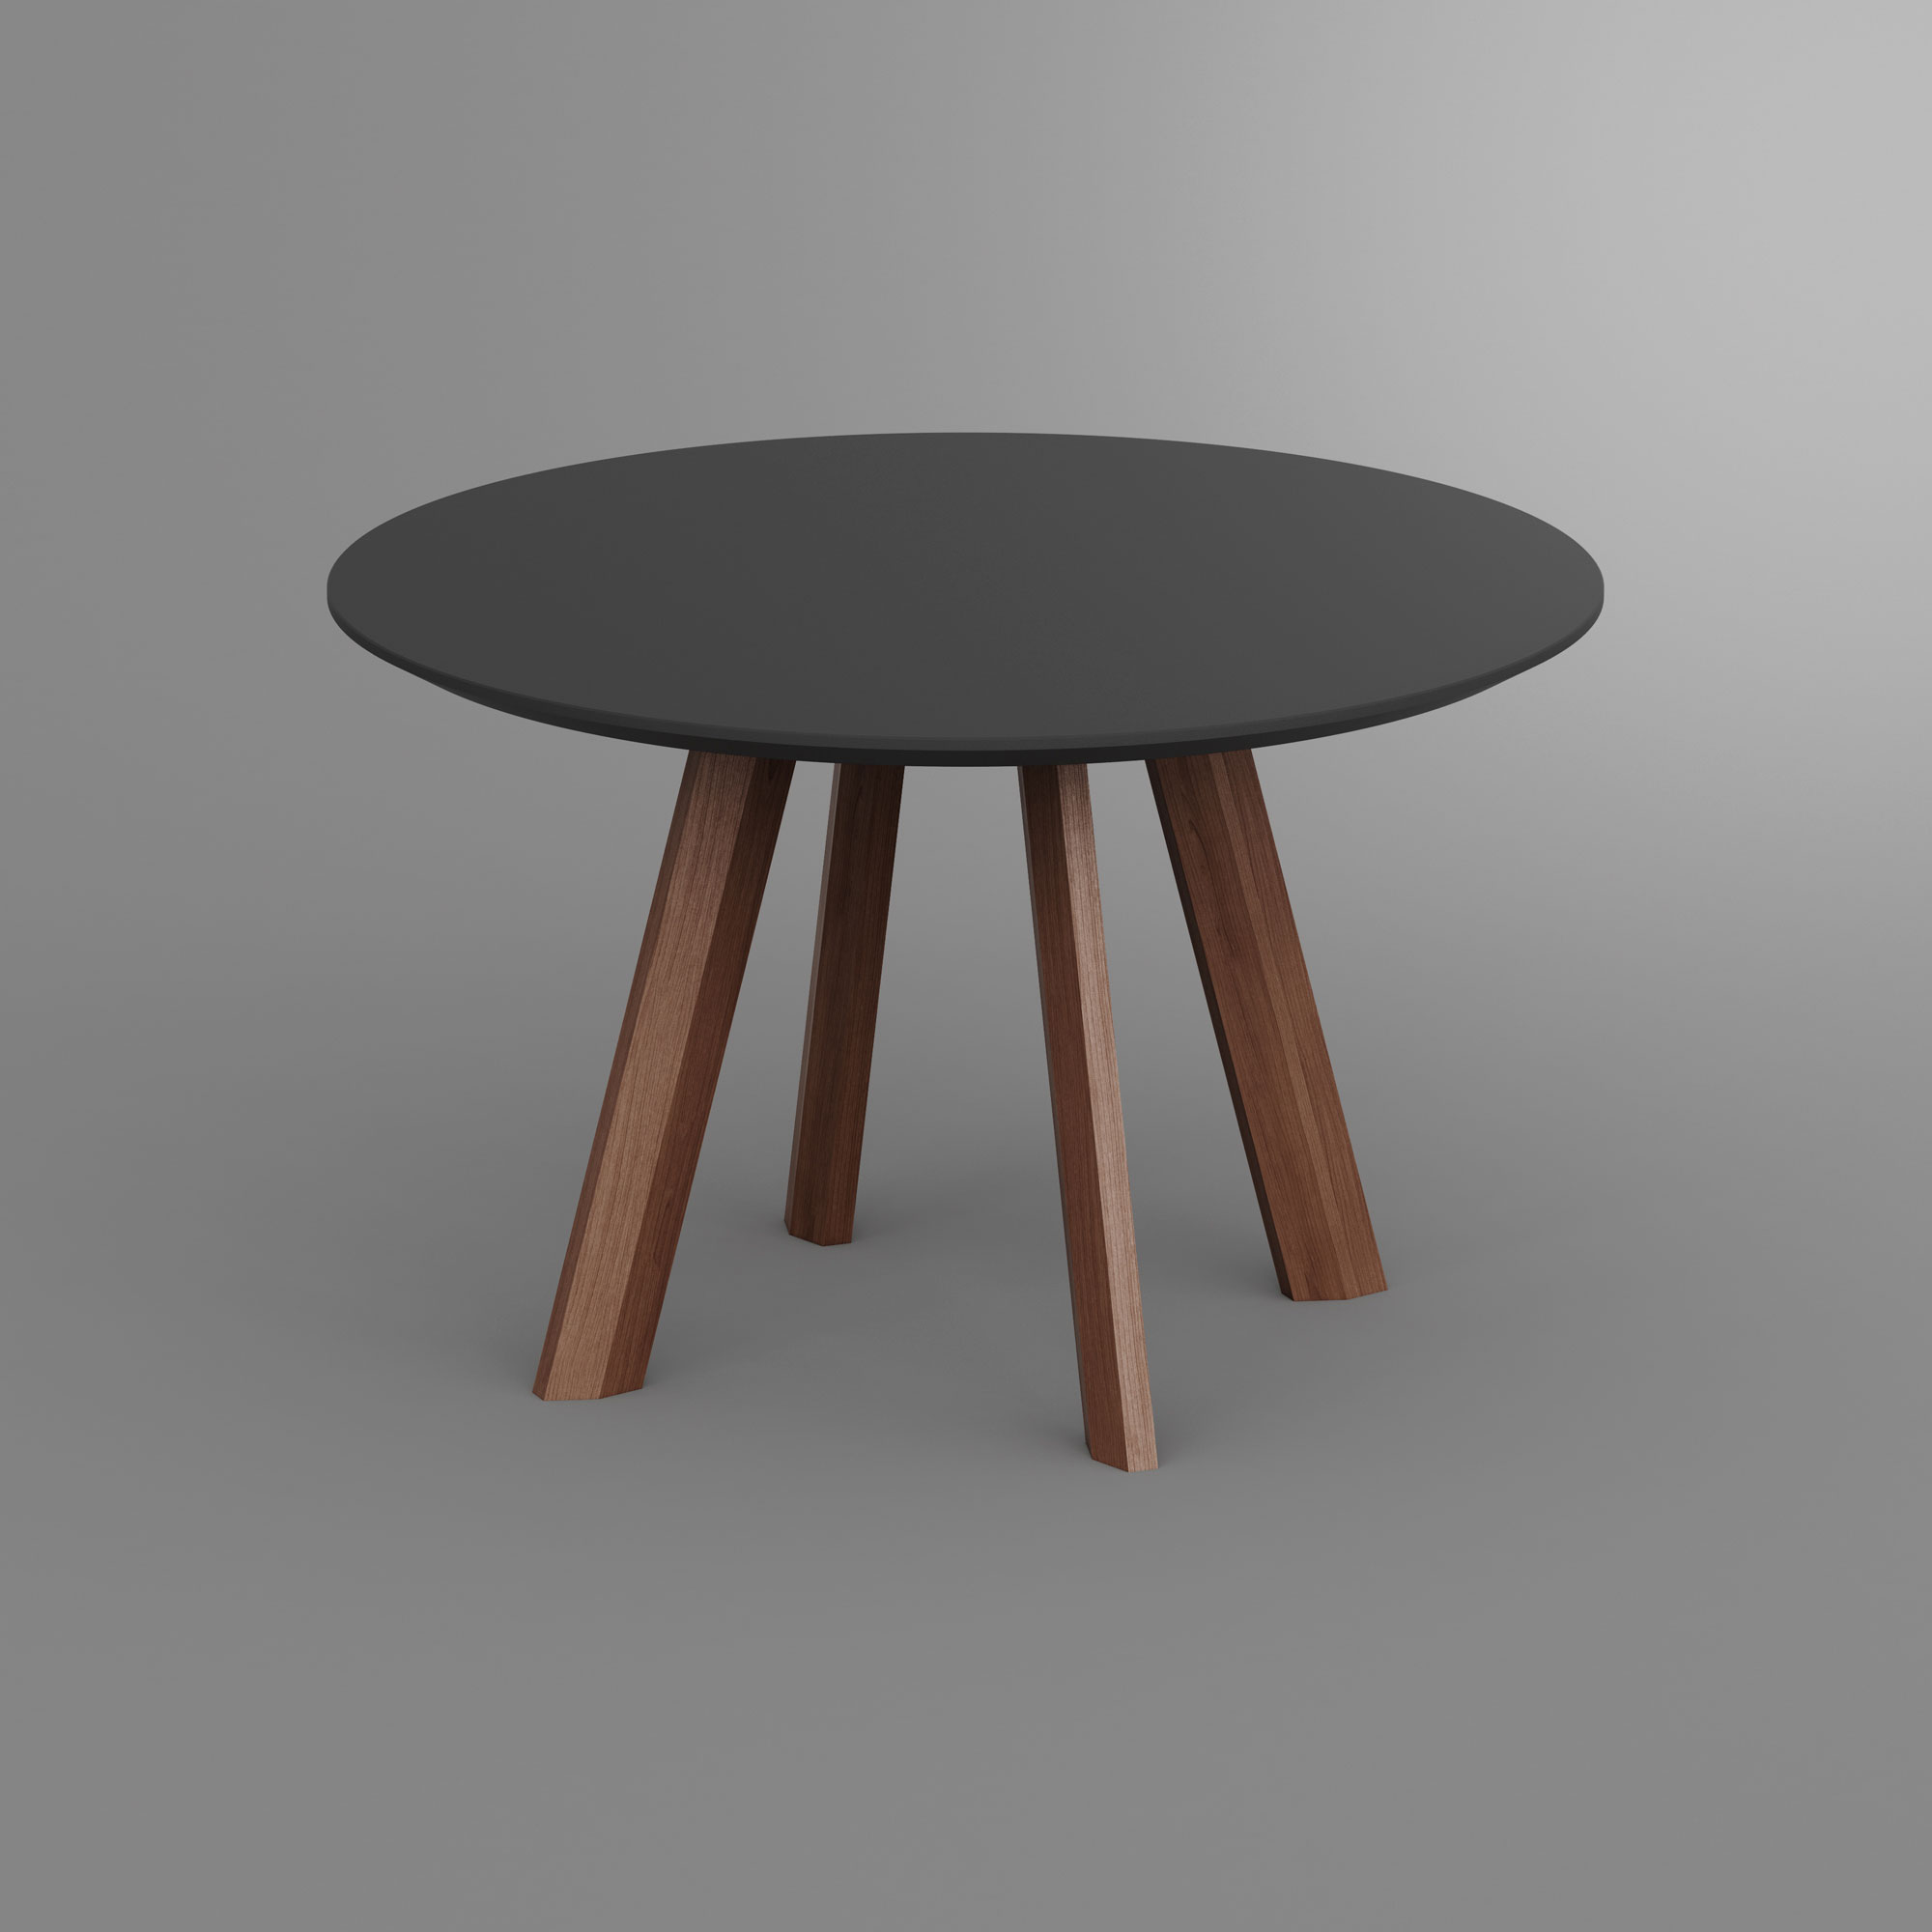 Round Linoleum Table RHOMBI ROUND LINO rhombi1 custom made in solid wood by vitamin design